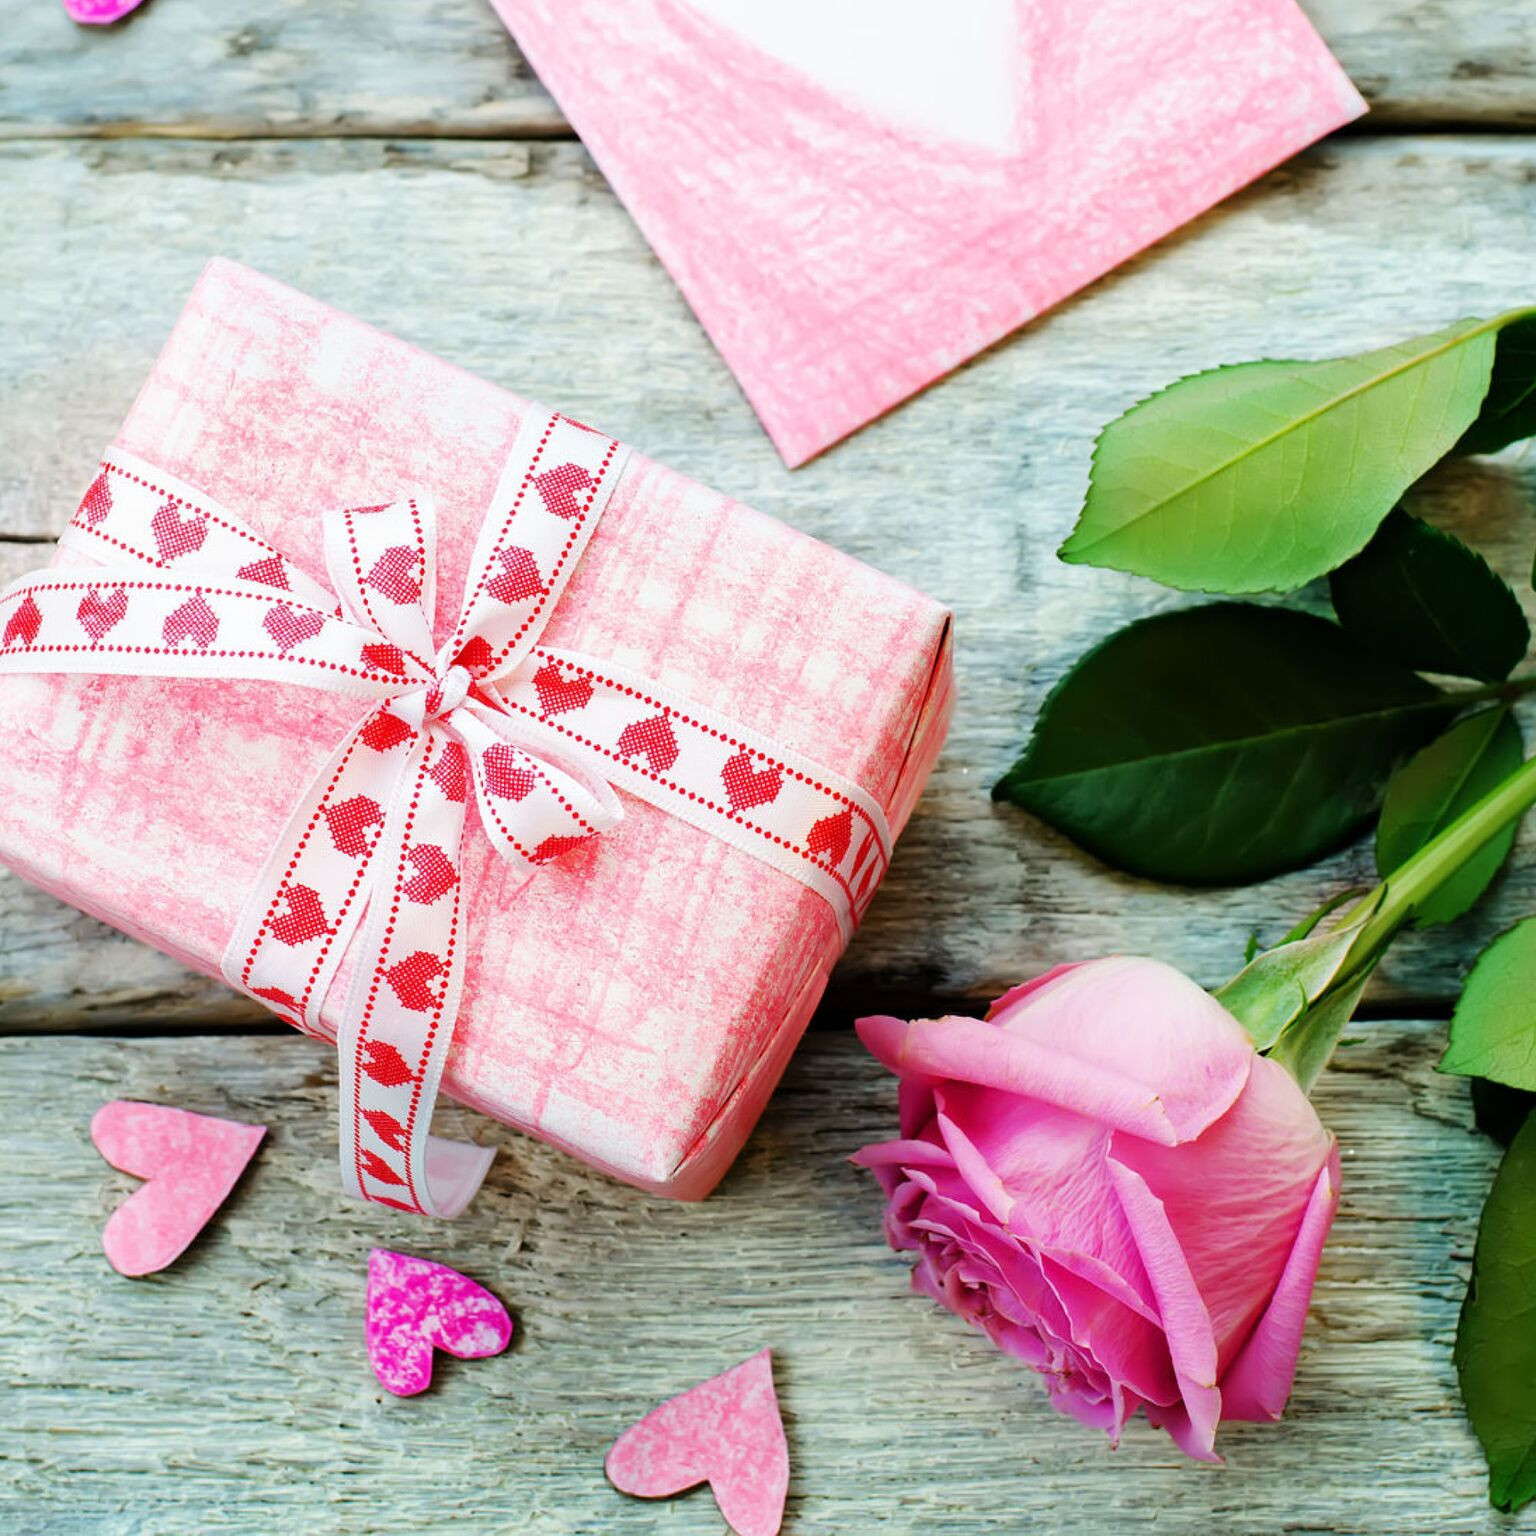 Cheap Valentines Day Gift Ideas
 15 Valentine s Day Gift Ideas for Under $15